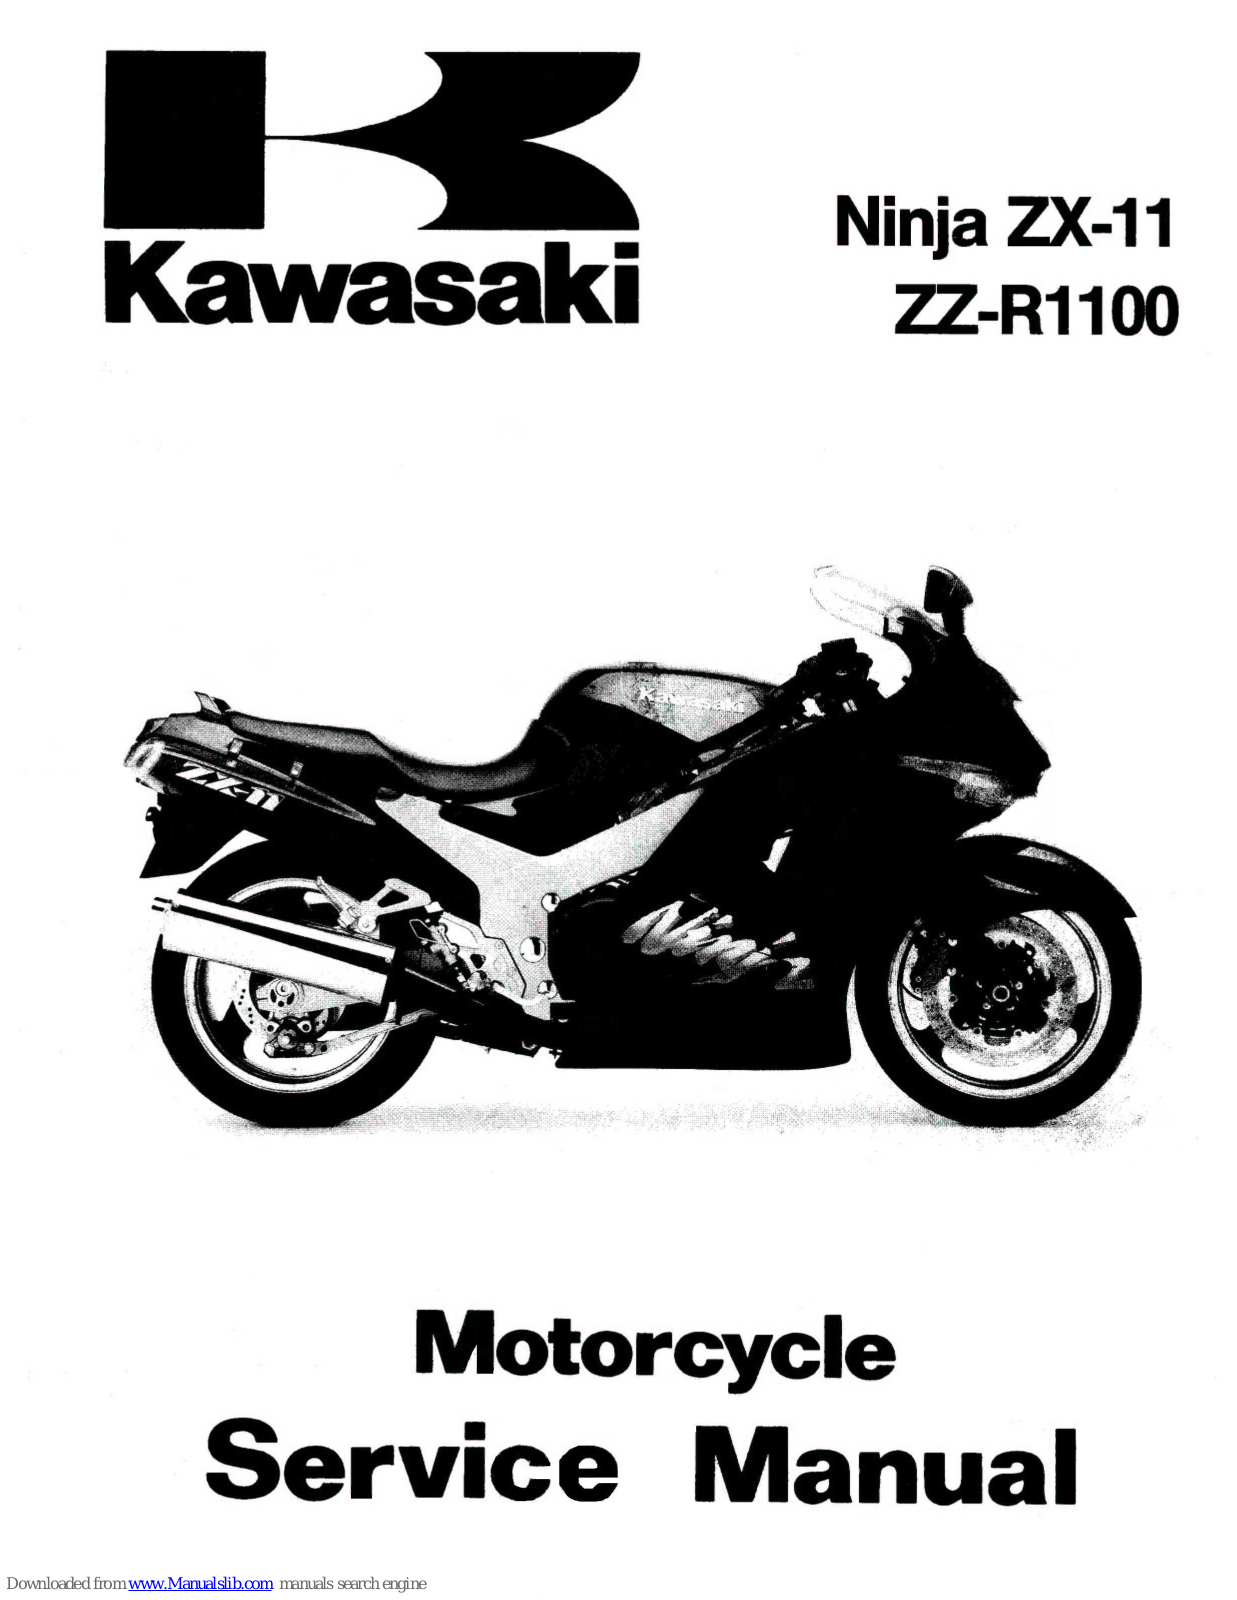 Kawasaki zz-r1100, ninja zx-11 Service Manual